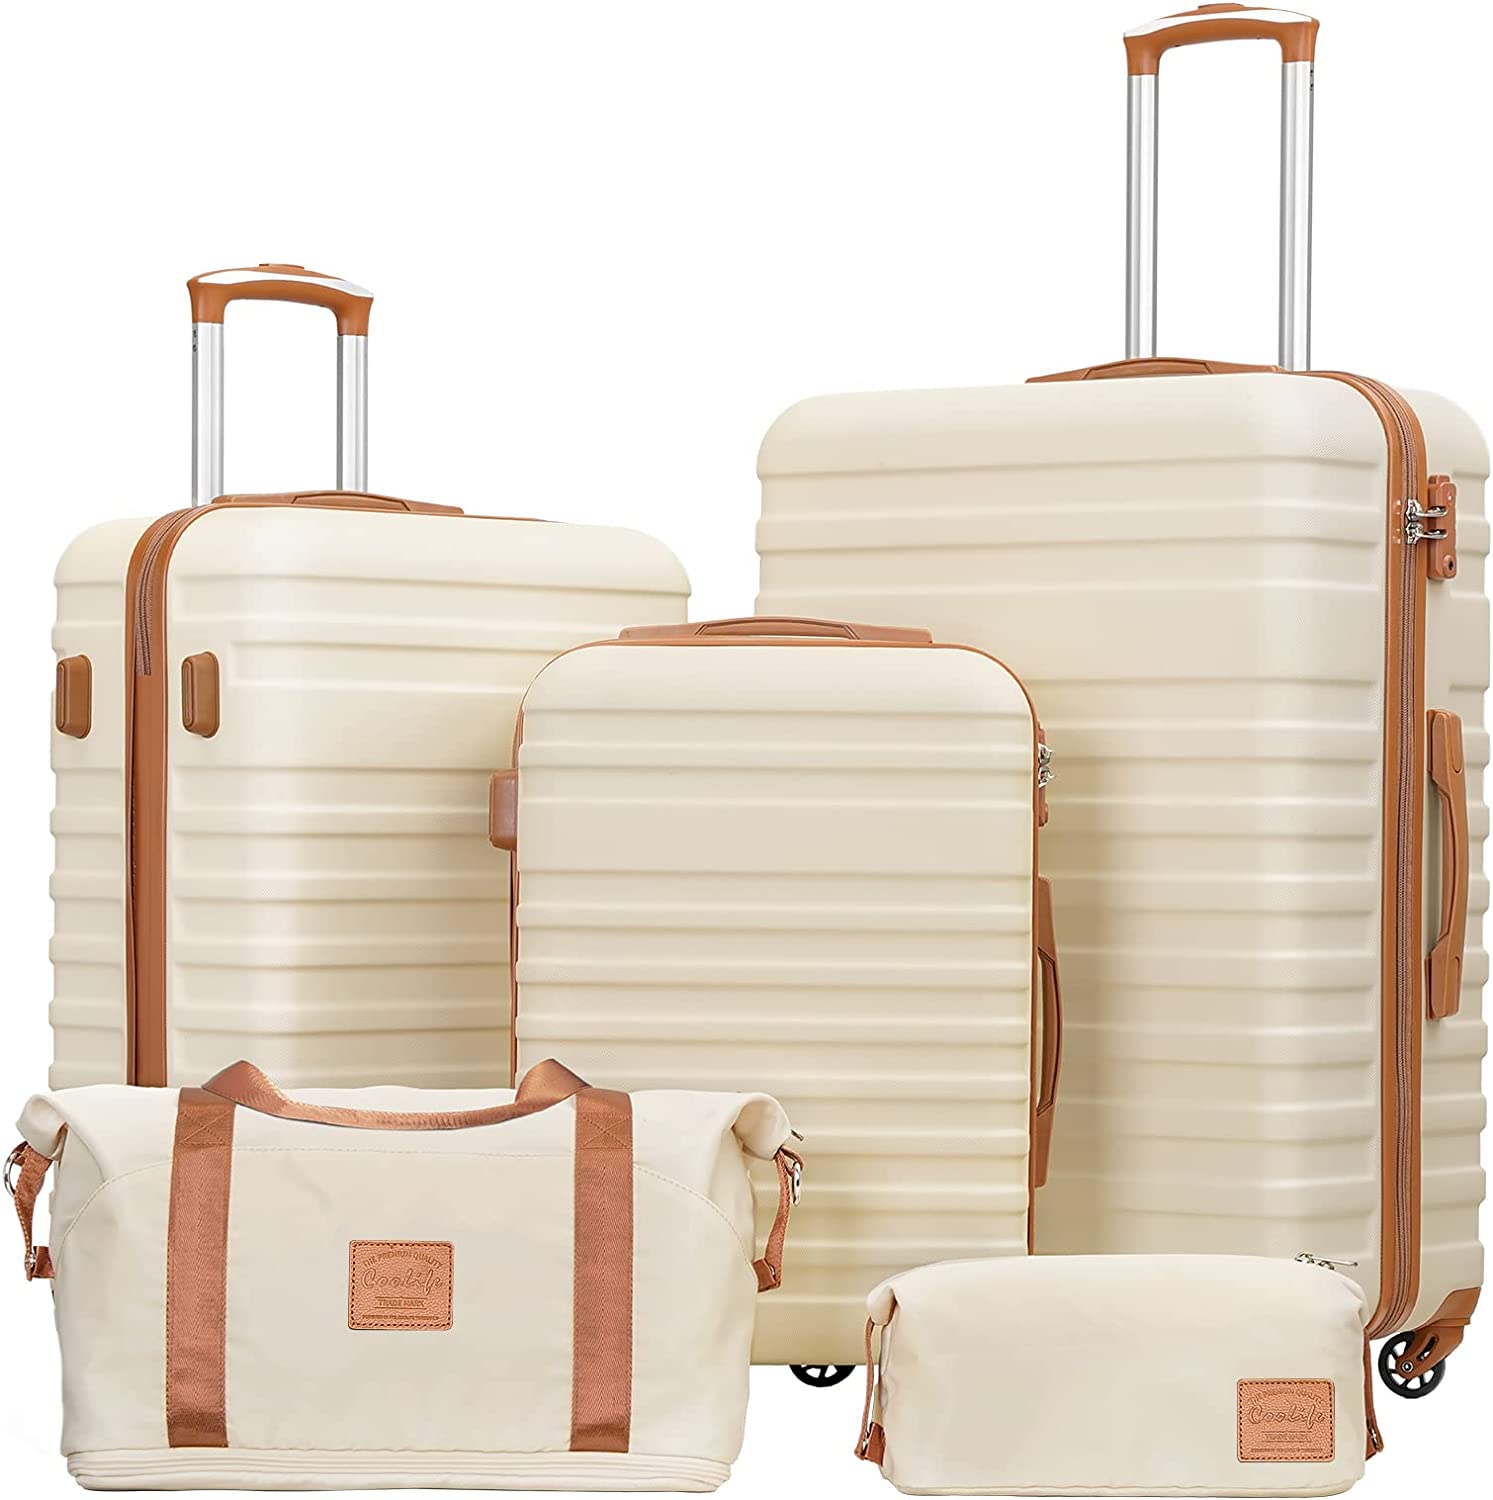 Luggage Sets Suitcase Set 5 Piece Luggage Set Carry On Hardside Luggage with TSA Lock Spinner Wheels-Suitcase clearance